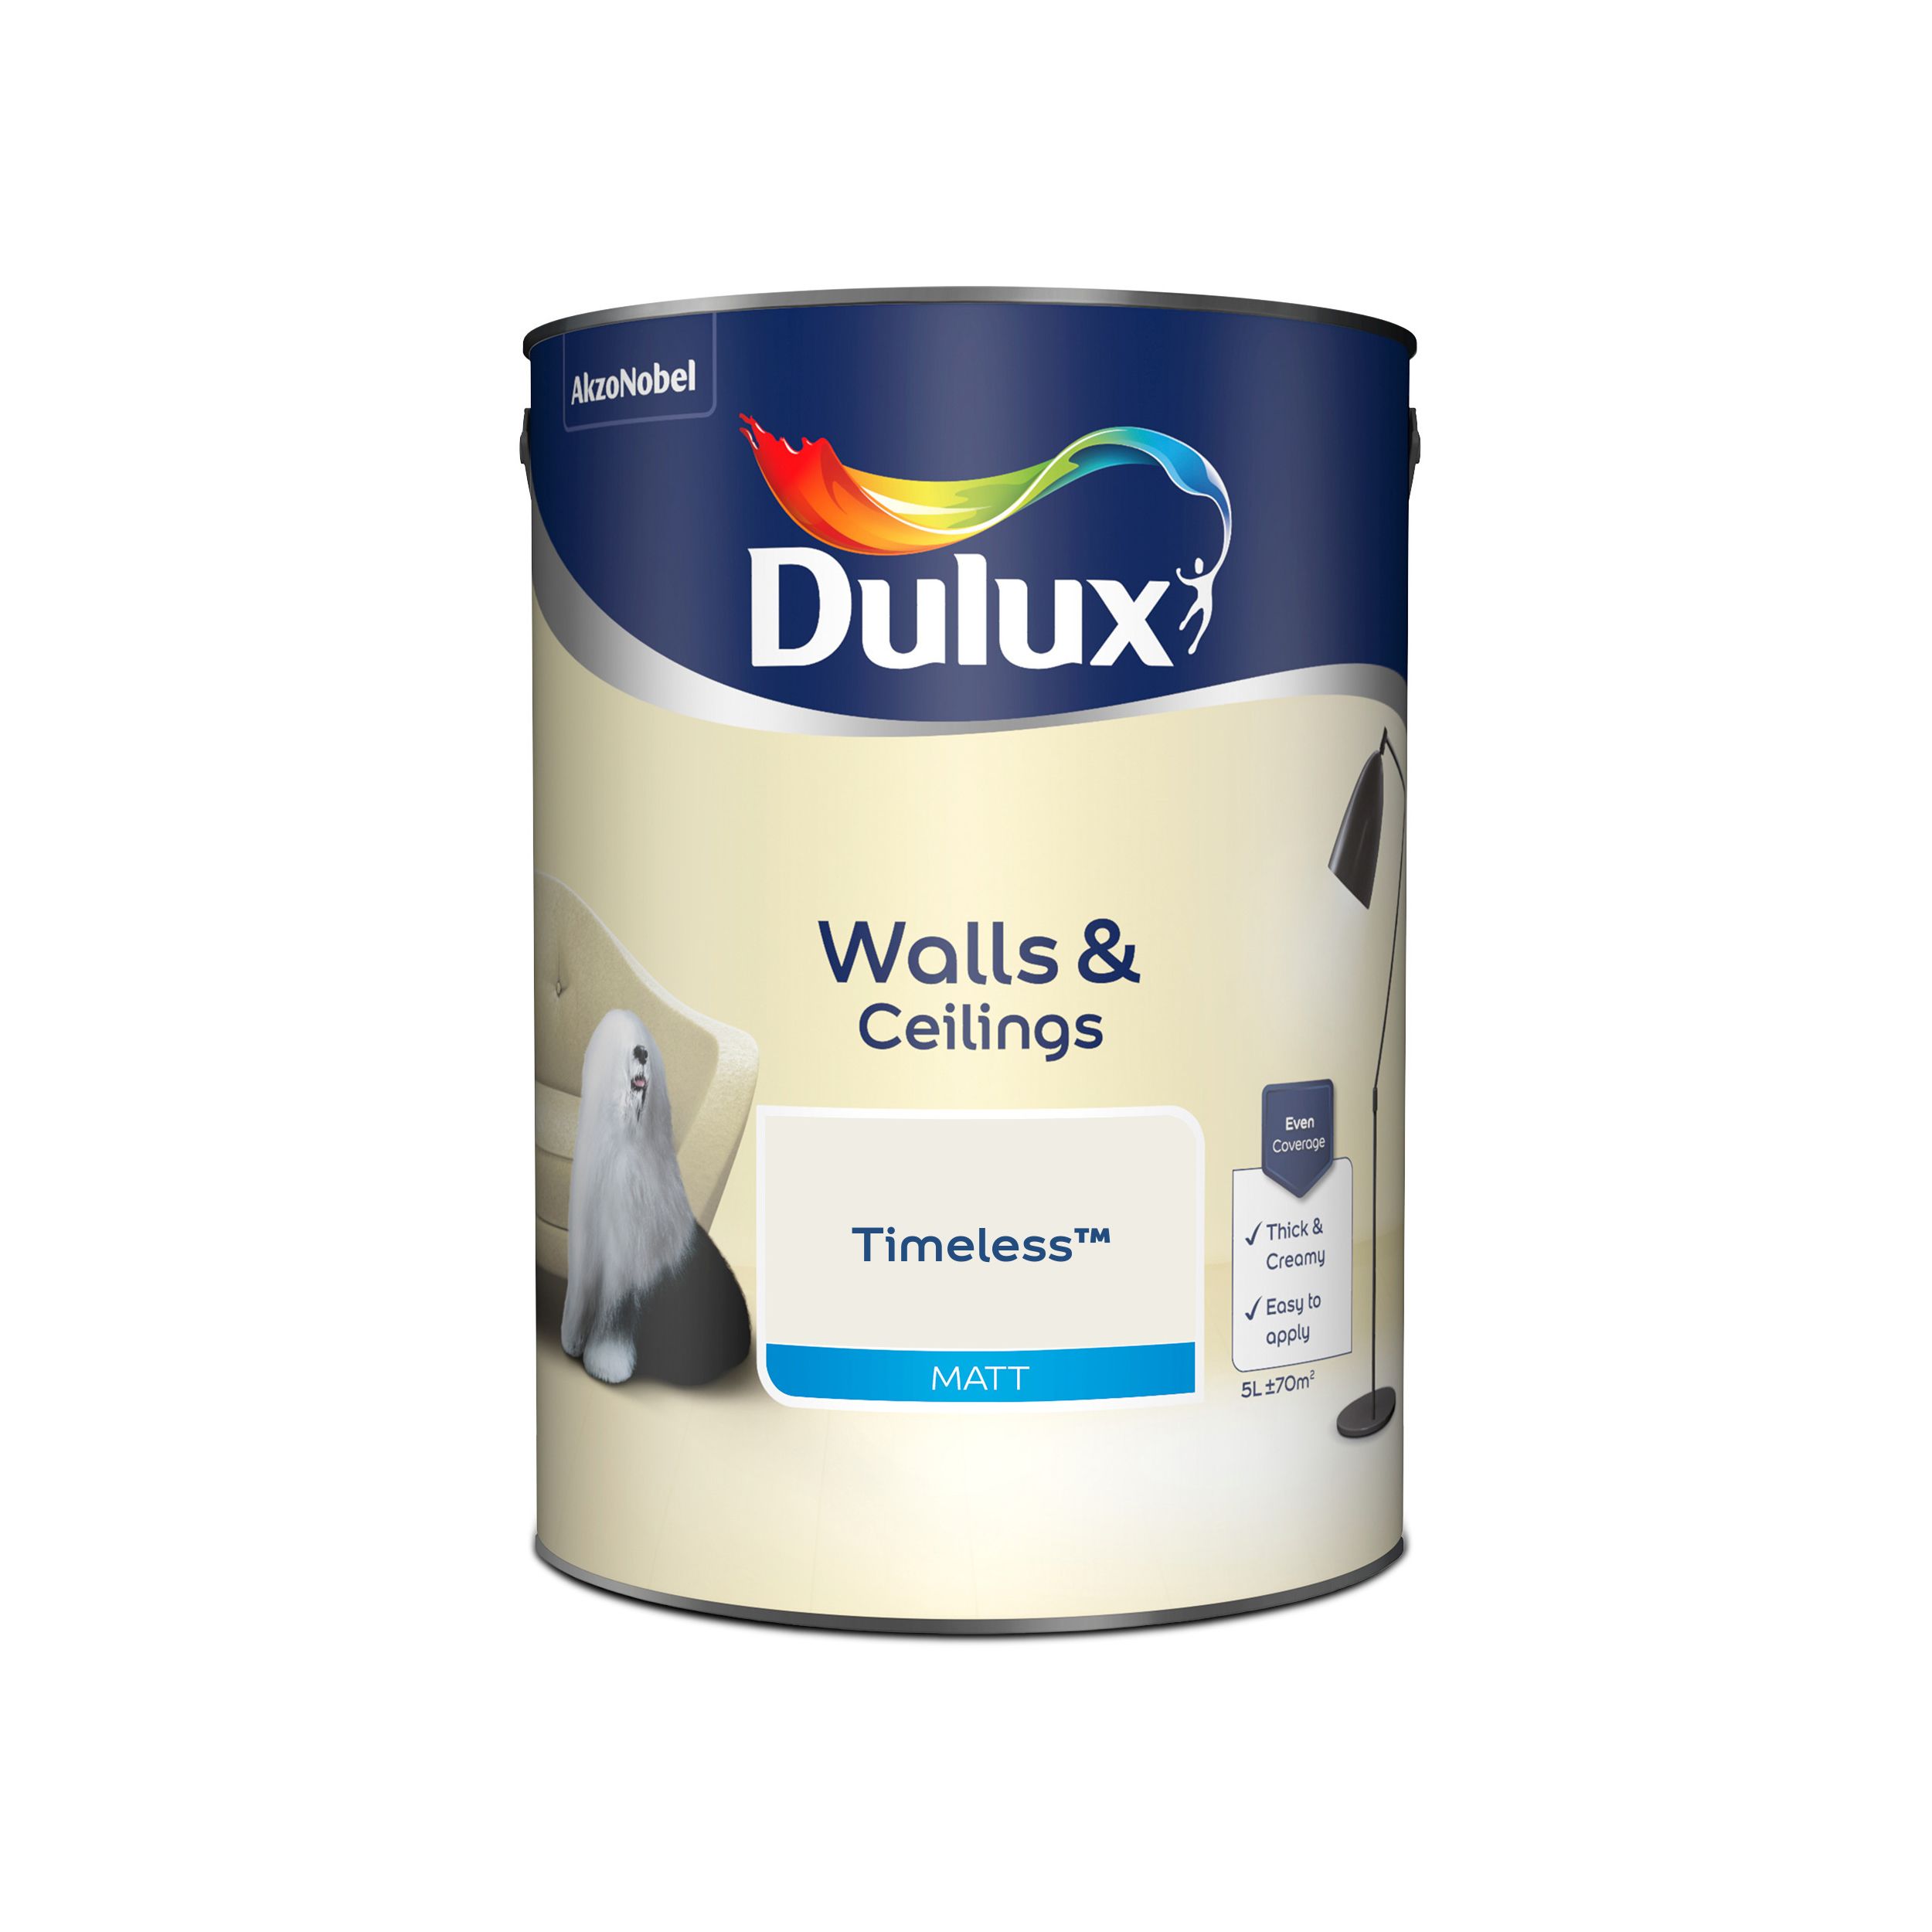 Dulux Walls & ceilings Timeless Matt Emulsion paint, 5L